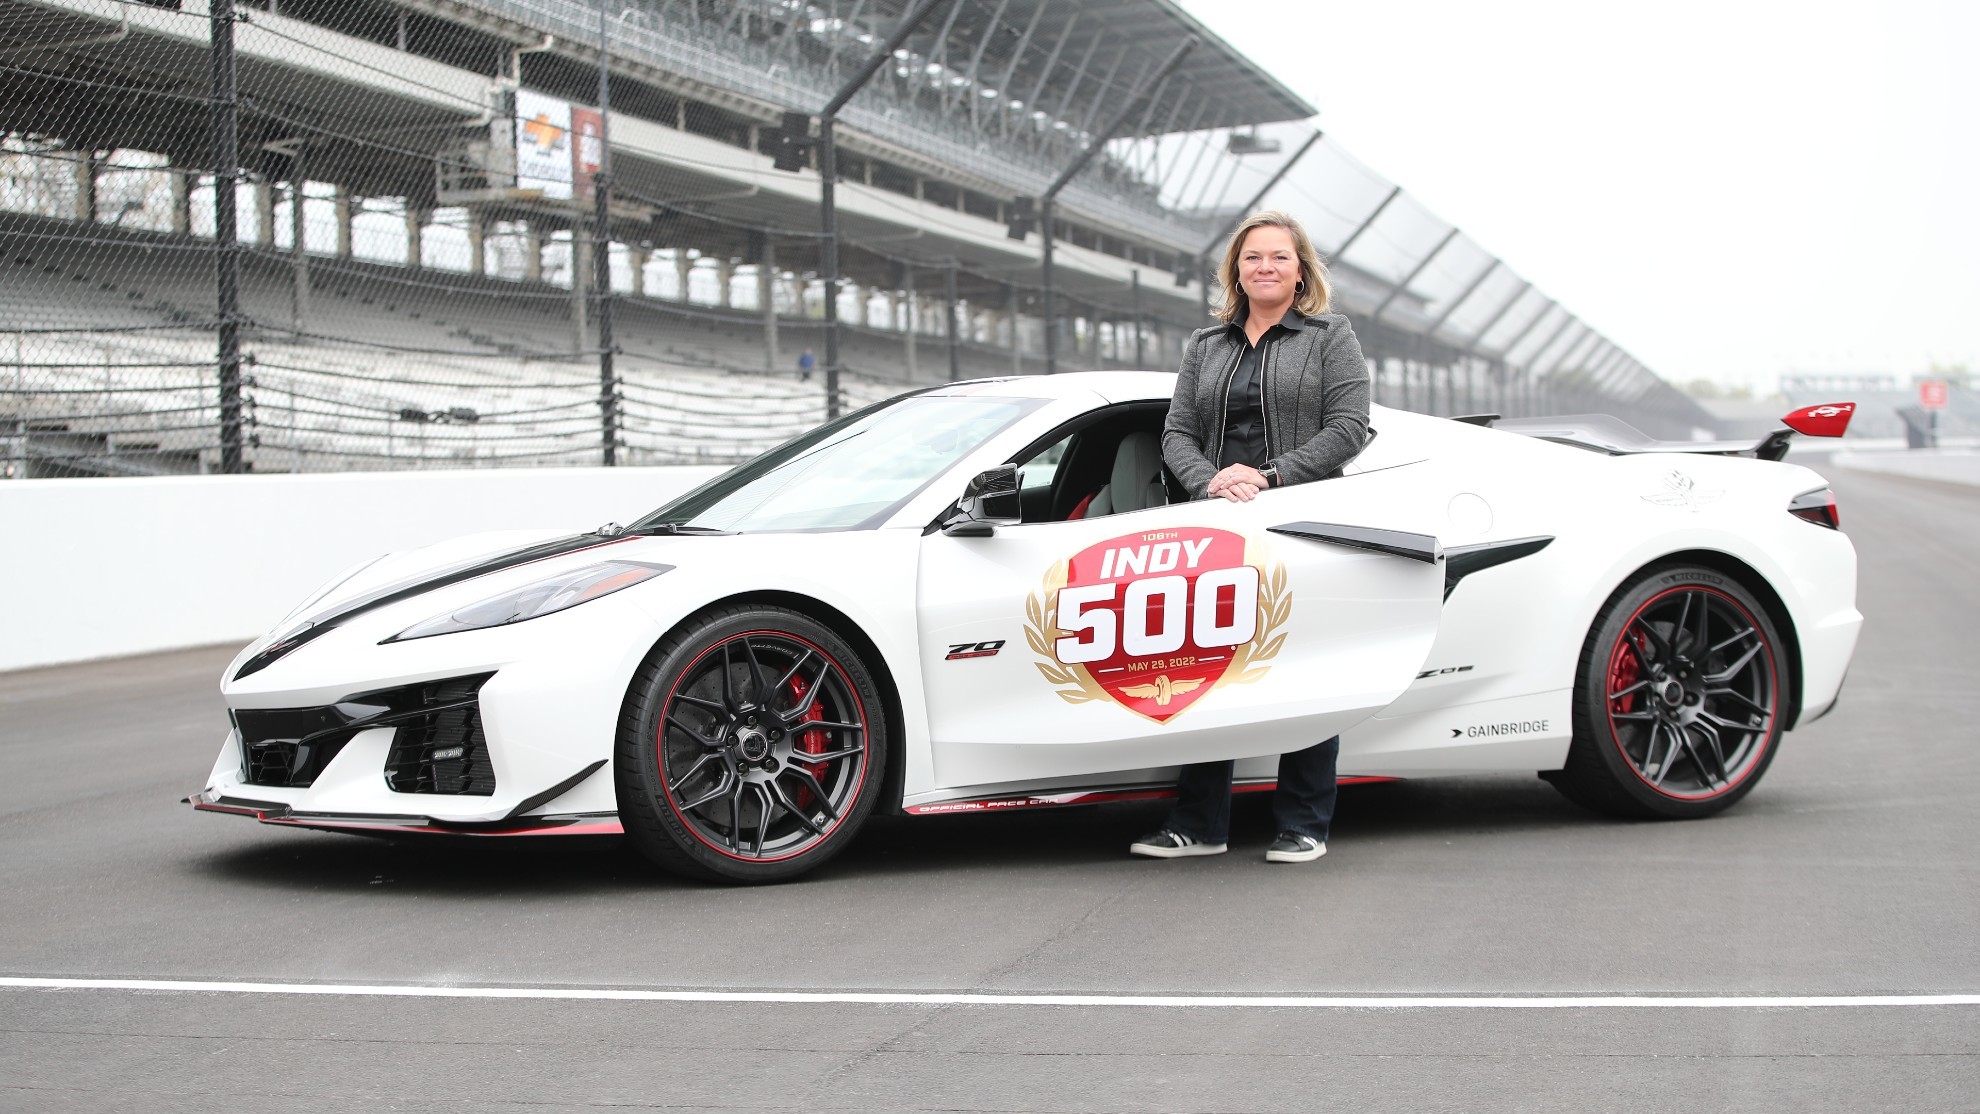 Indy 500 - 500 Millas de Indianapolis - Pace Car - Chevrolet Corvette Z06 - Sarah Fisher - 70 aniversario